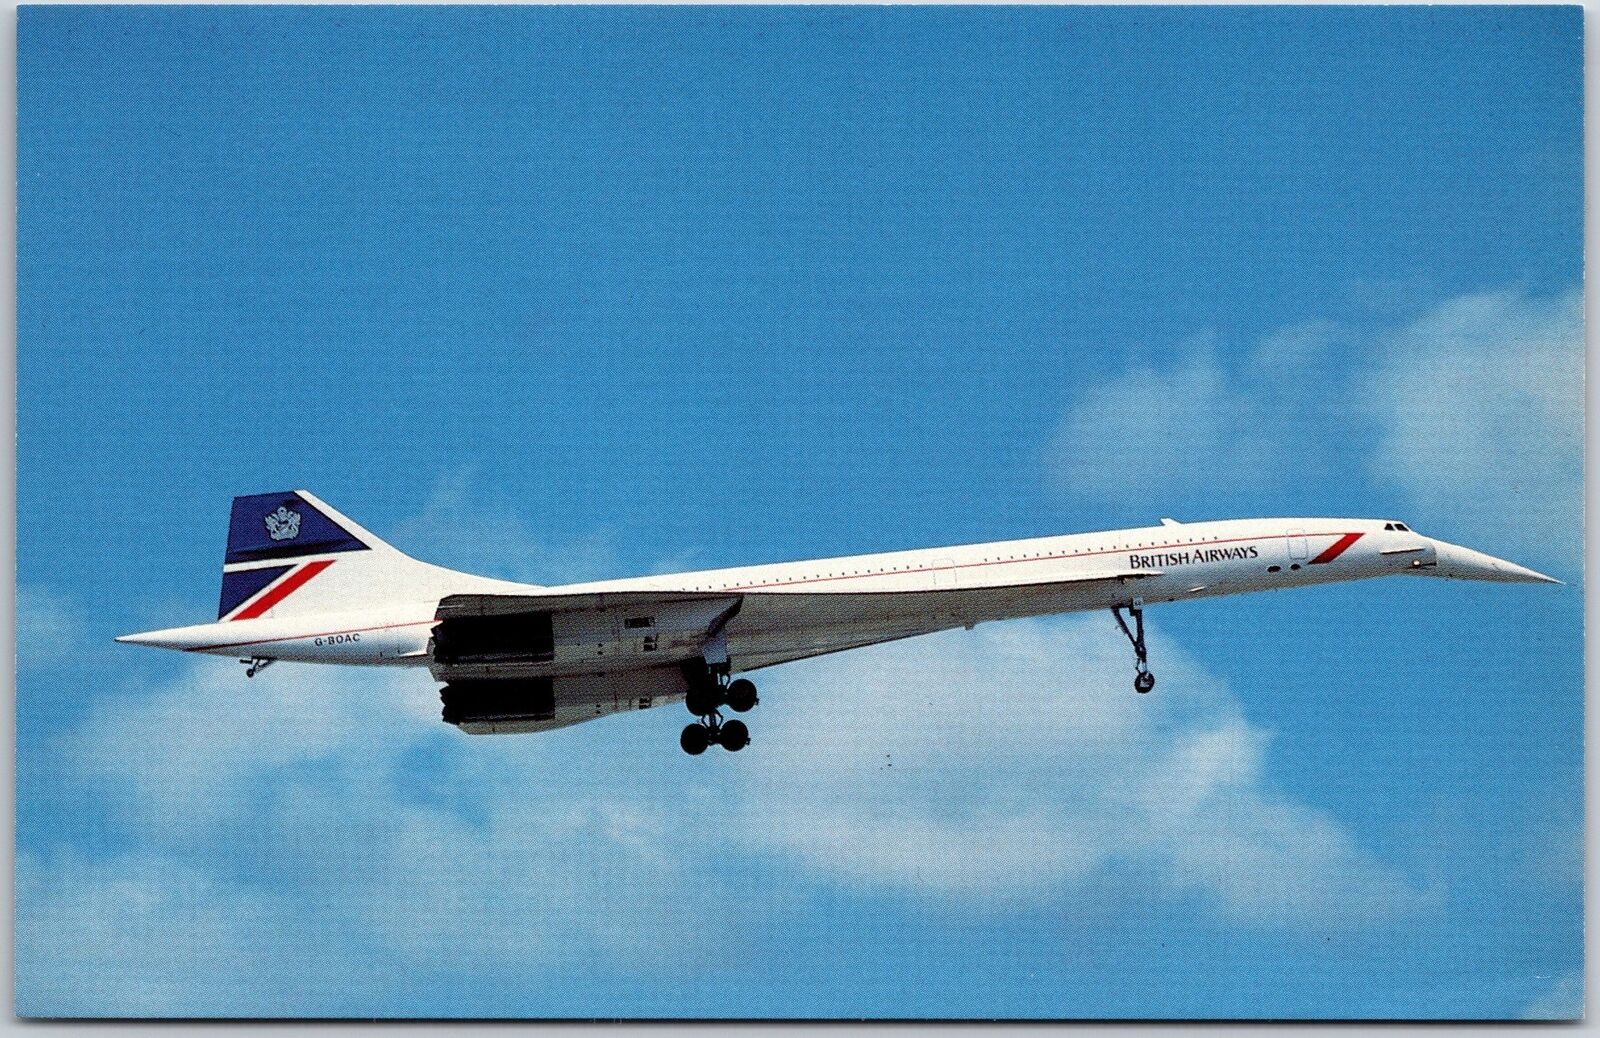 Airplane BAE/Aerospatiale Concorde 102 G-BOAC c/n 204 British Airways Postcard